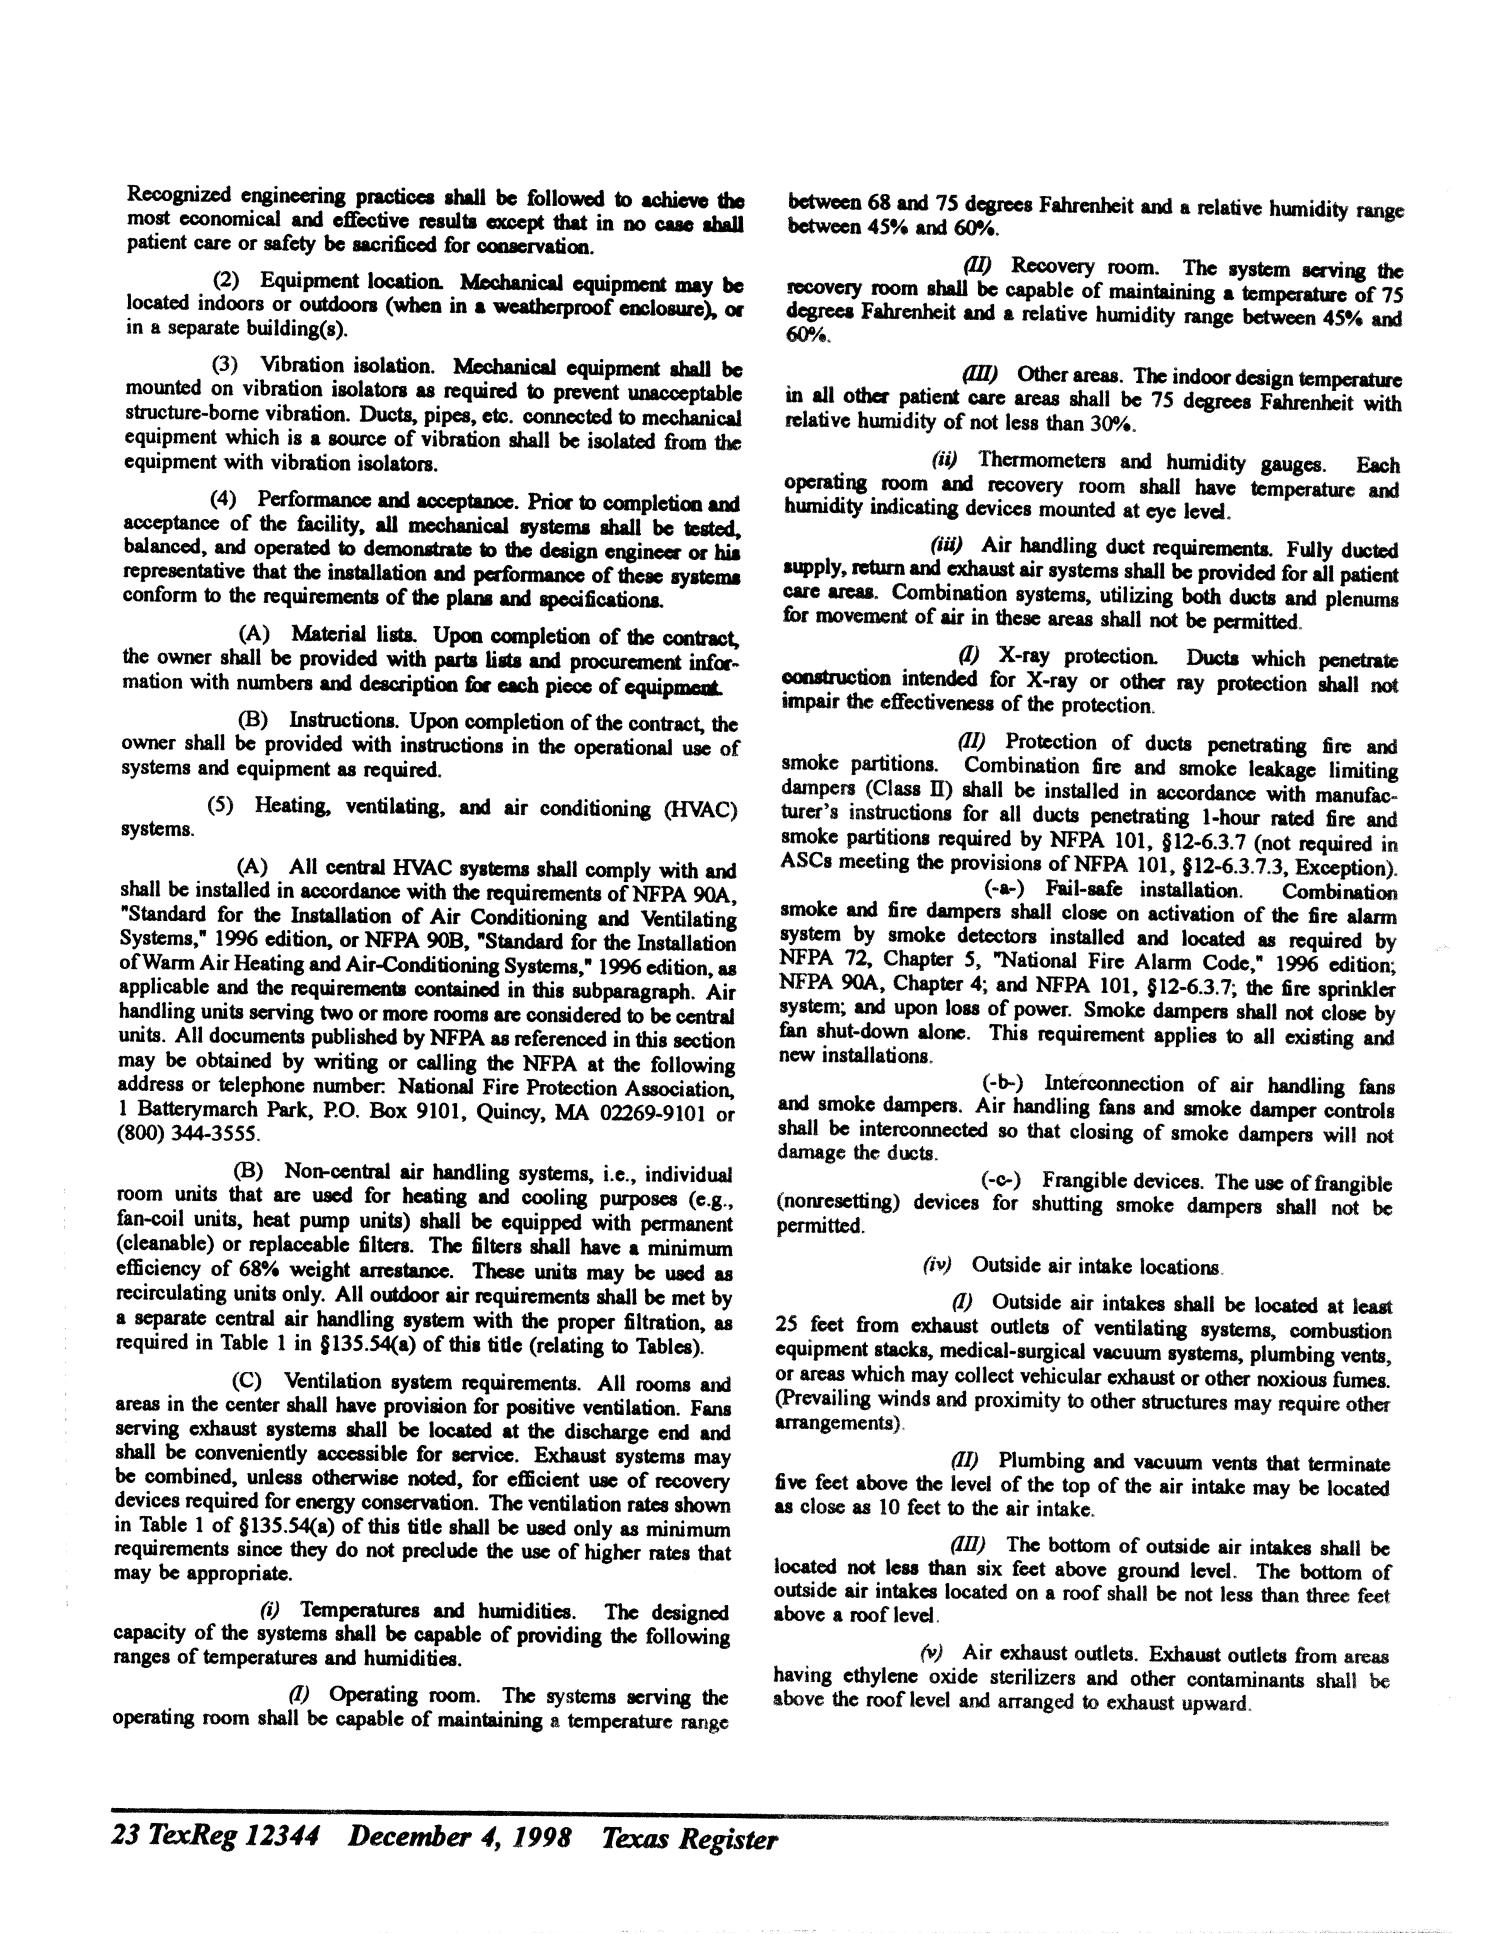 Texas Register, Volume 23, Number 49, Part III, Pages 12311-12450, December 4, 1998
                                                
                                                    12344
                                                